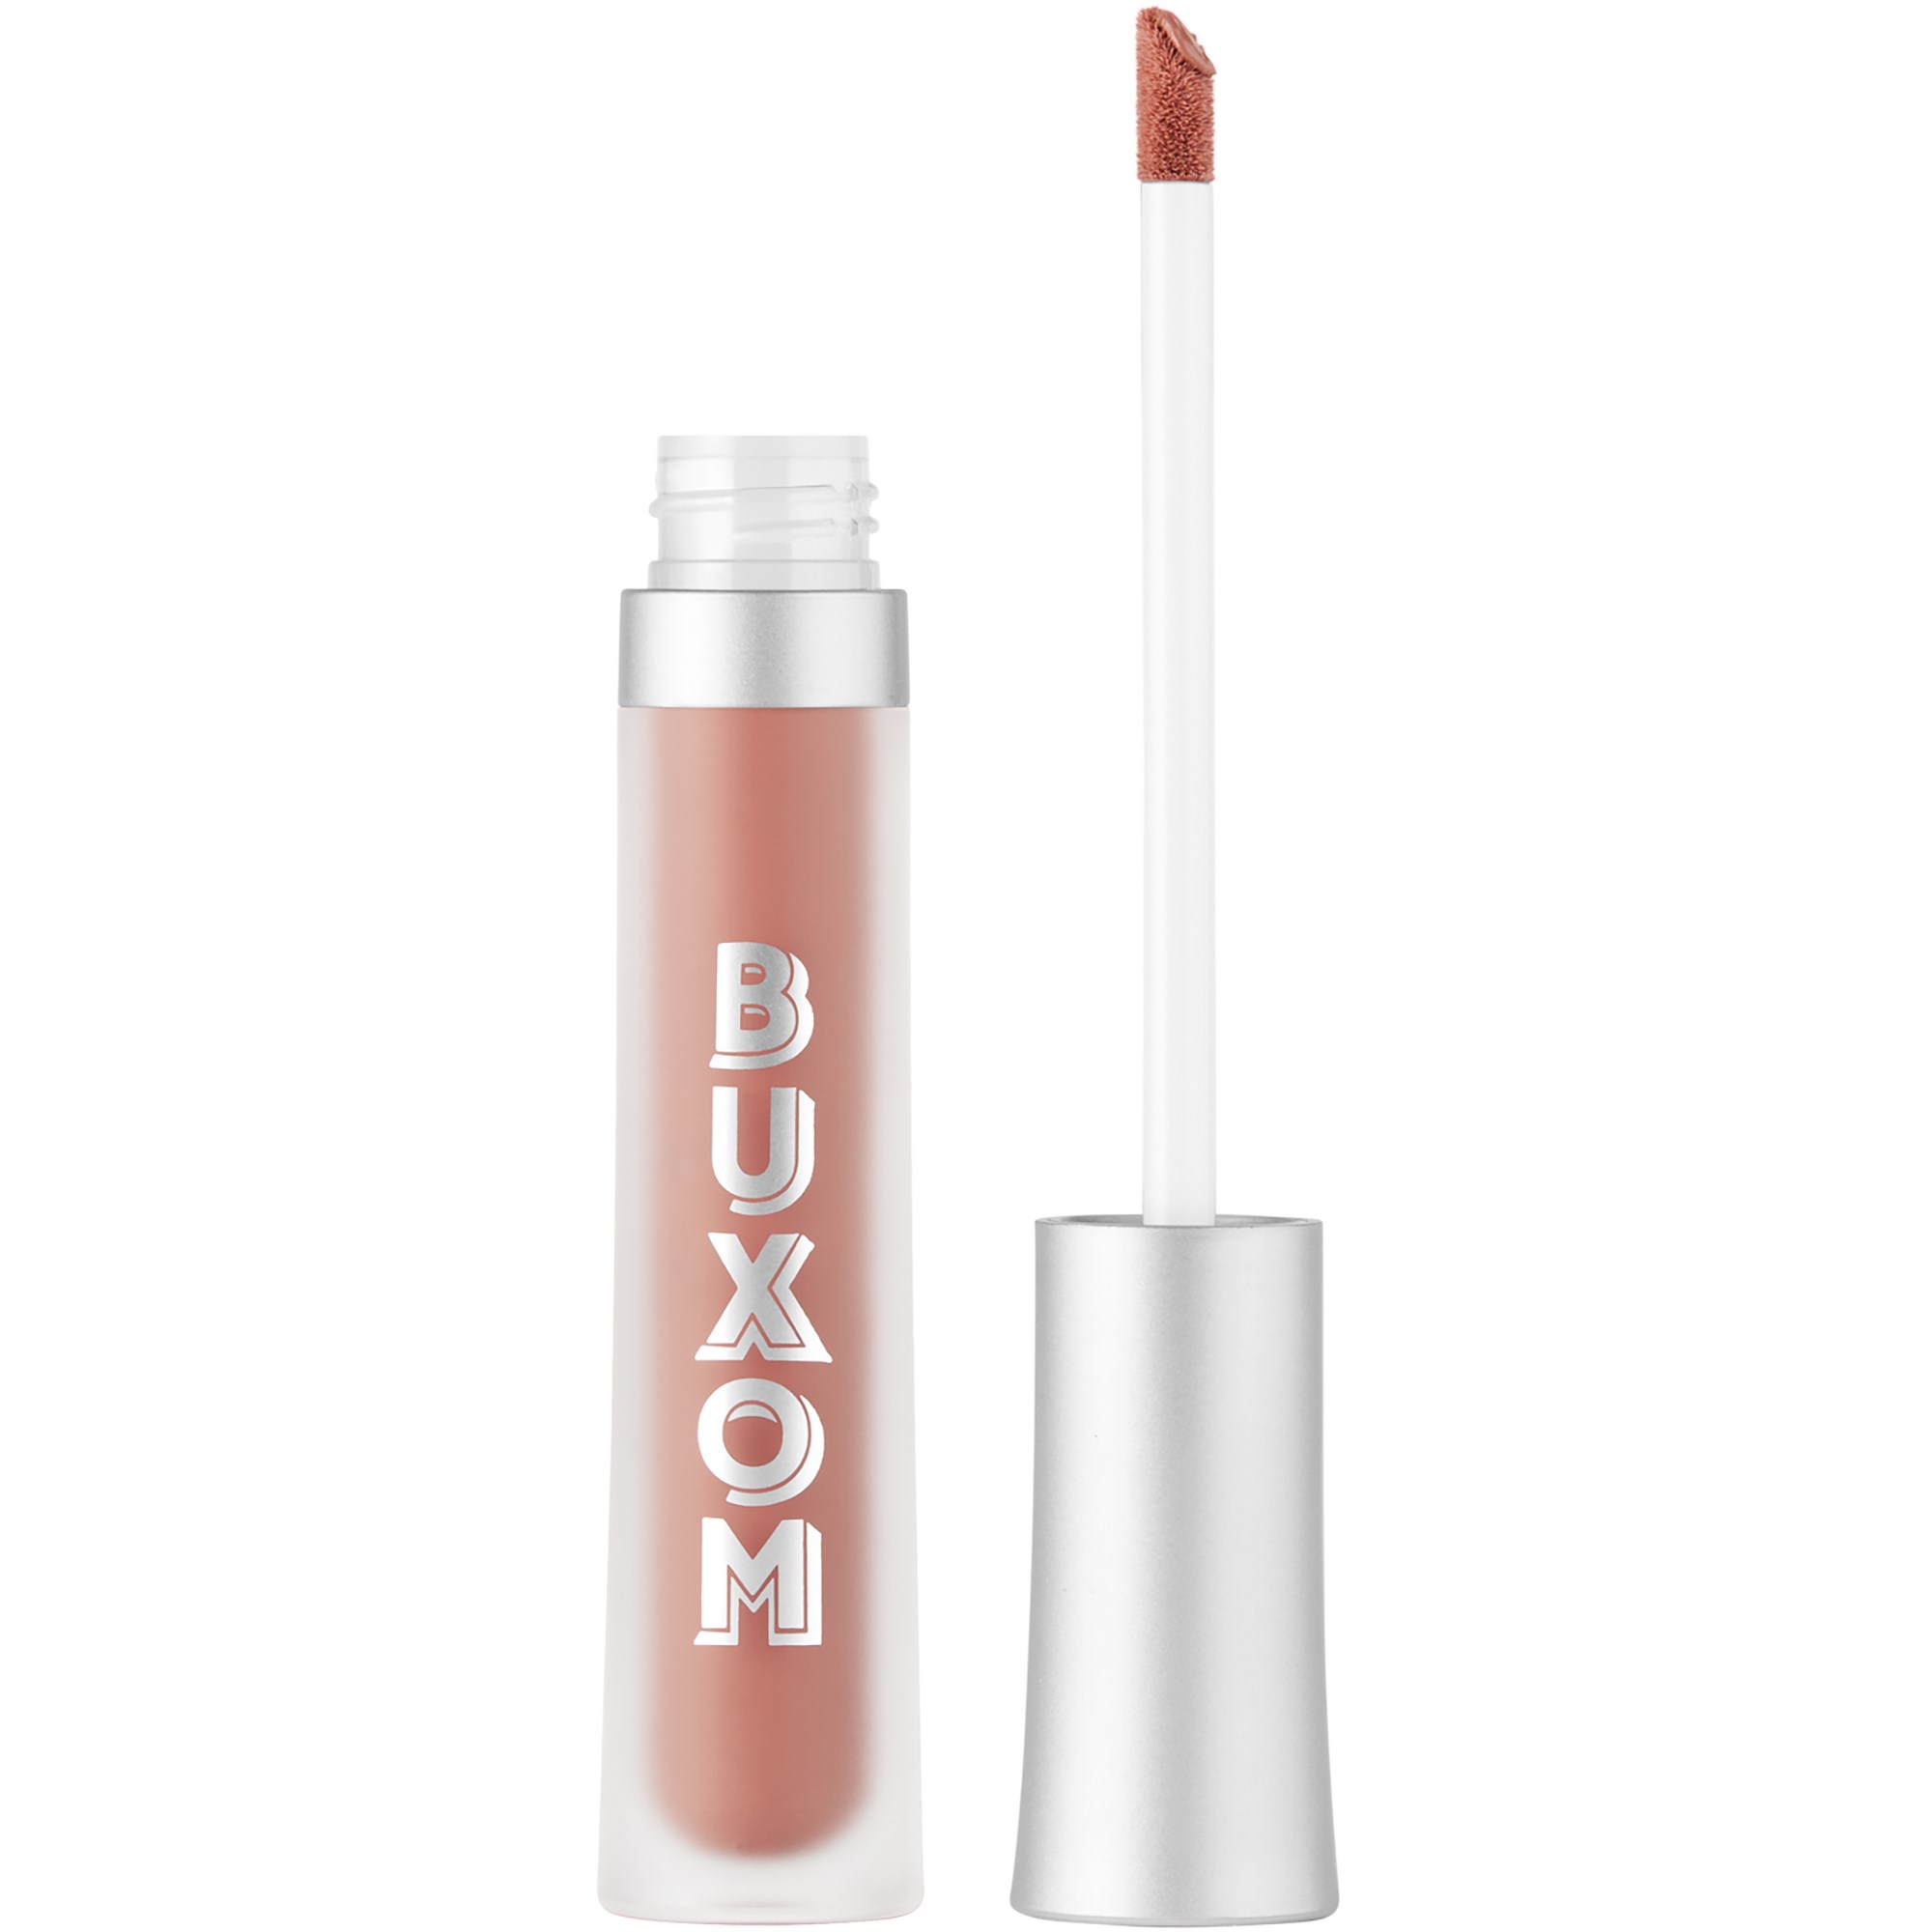 BUXOM Full On Plumping Liquid Lip Matte Spice Nude / Chill Night